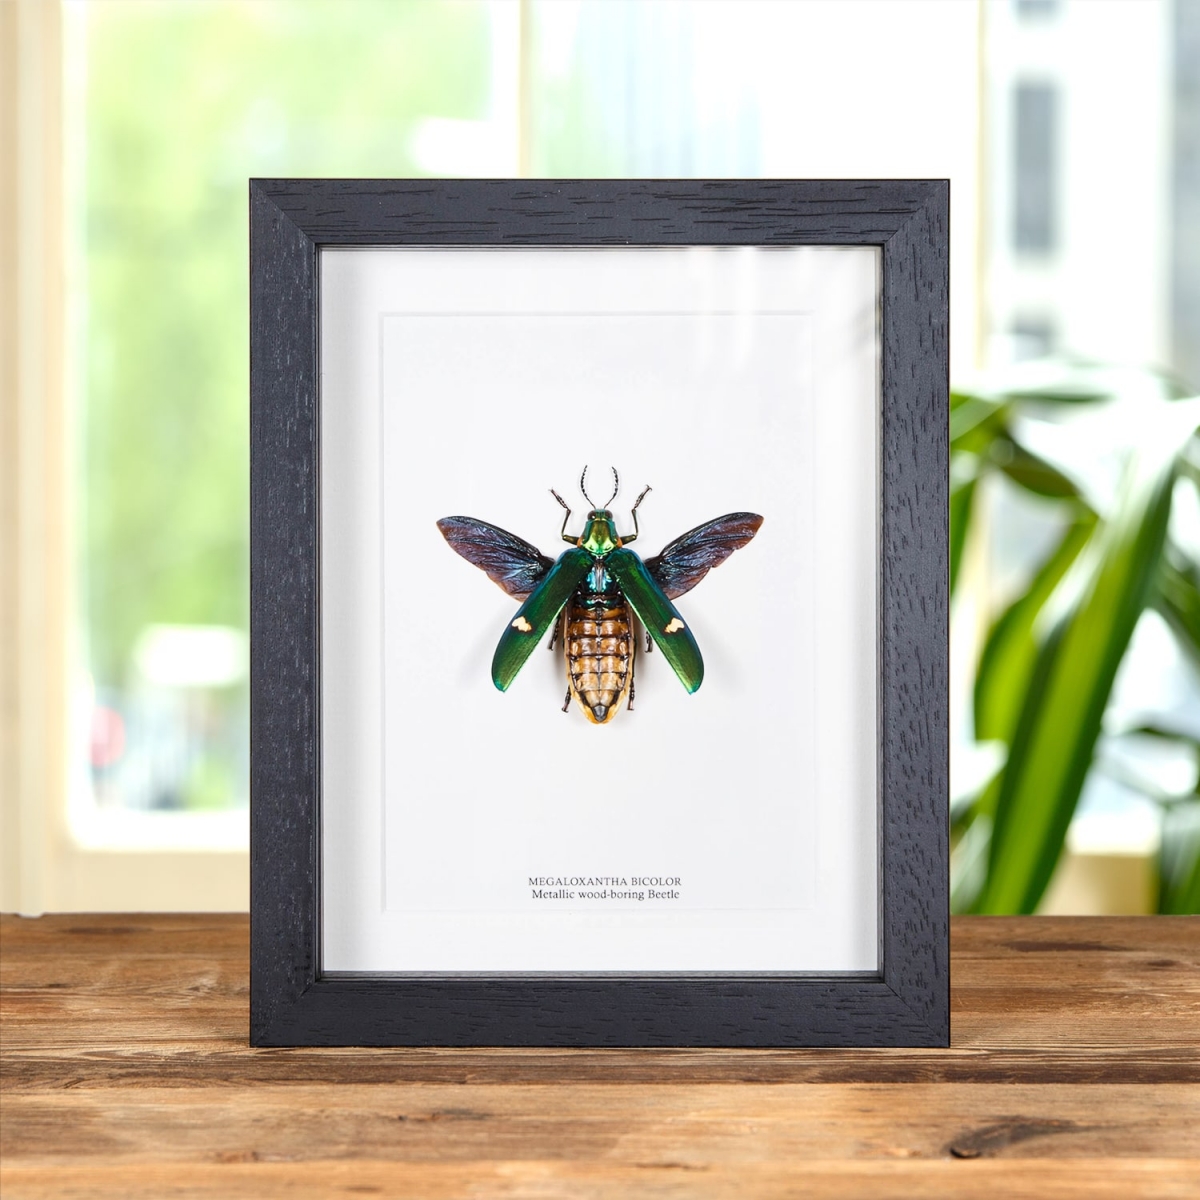 Minibeast Metallic wood-boring Beetle in Box Frame (Megaloxantha bicolor)